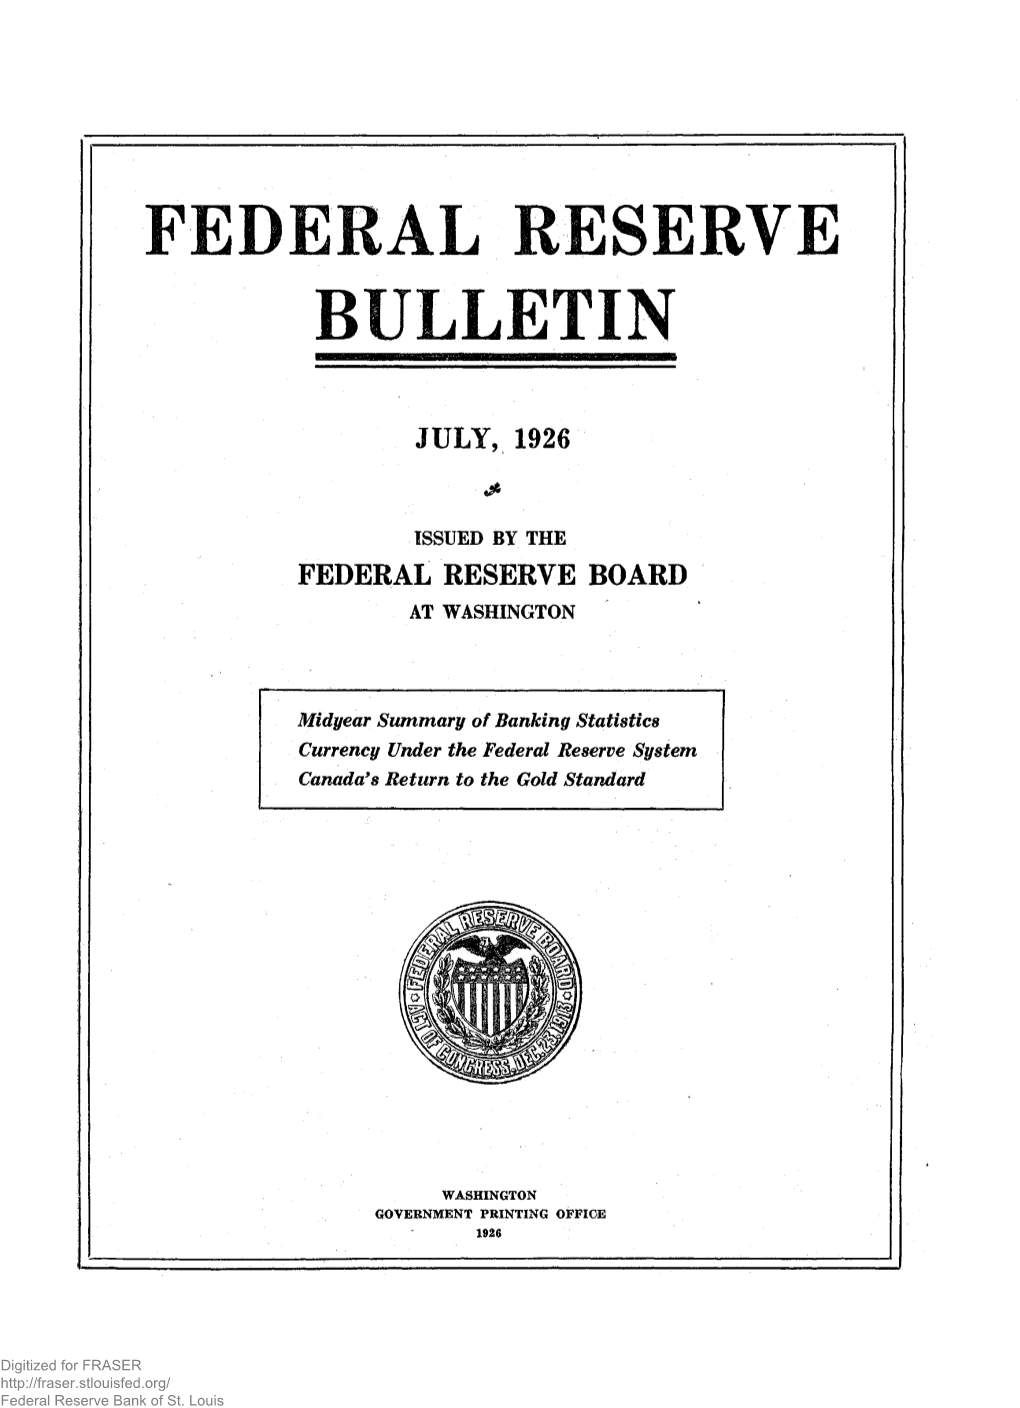 Federal Reserve Bulletin July 1926